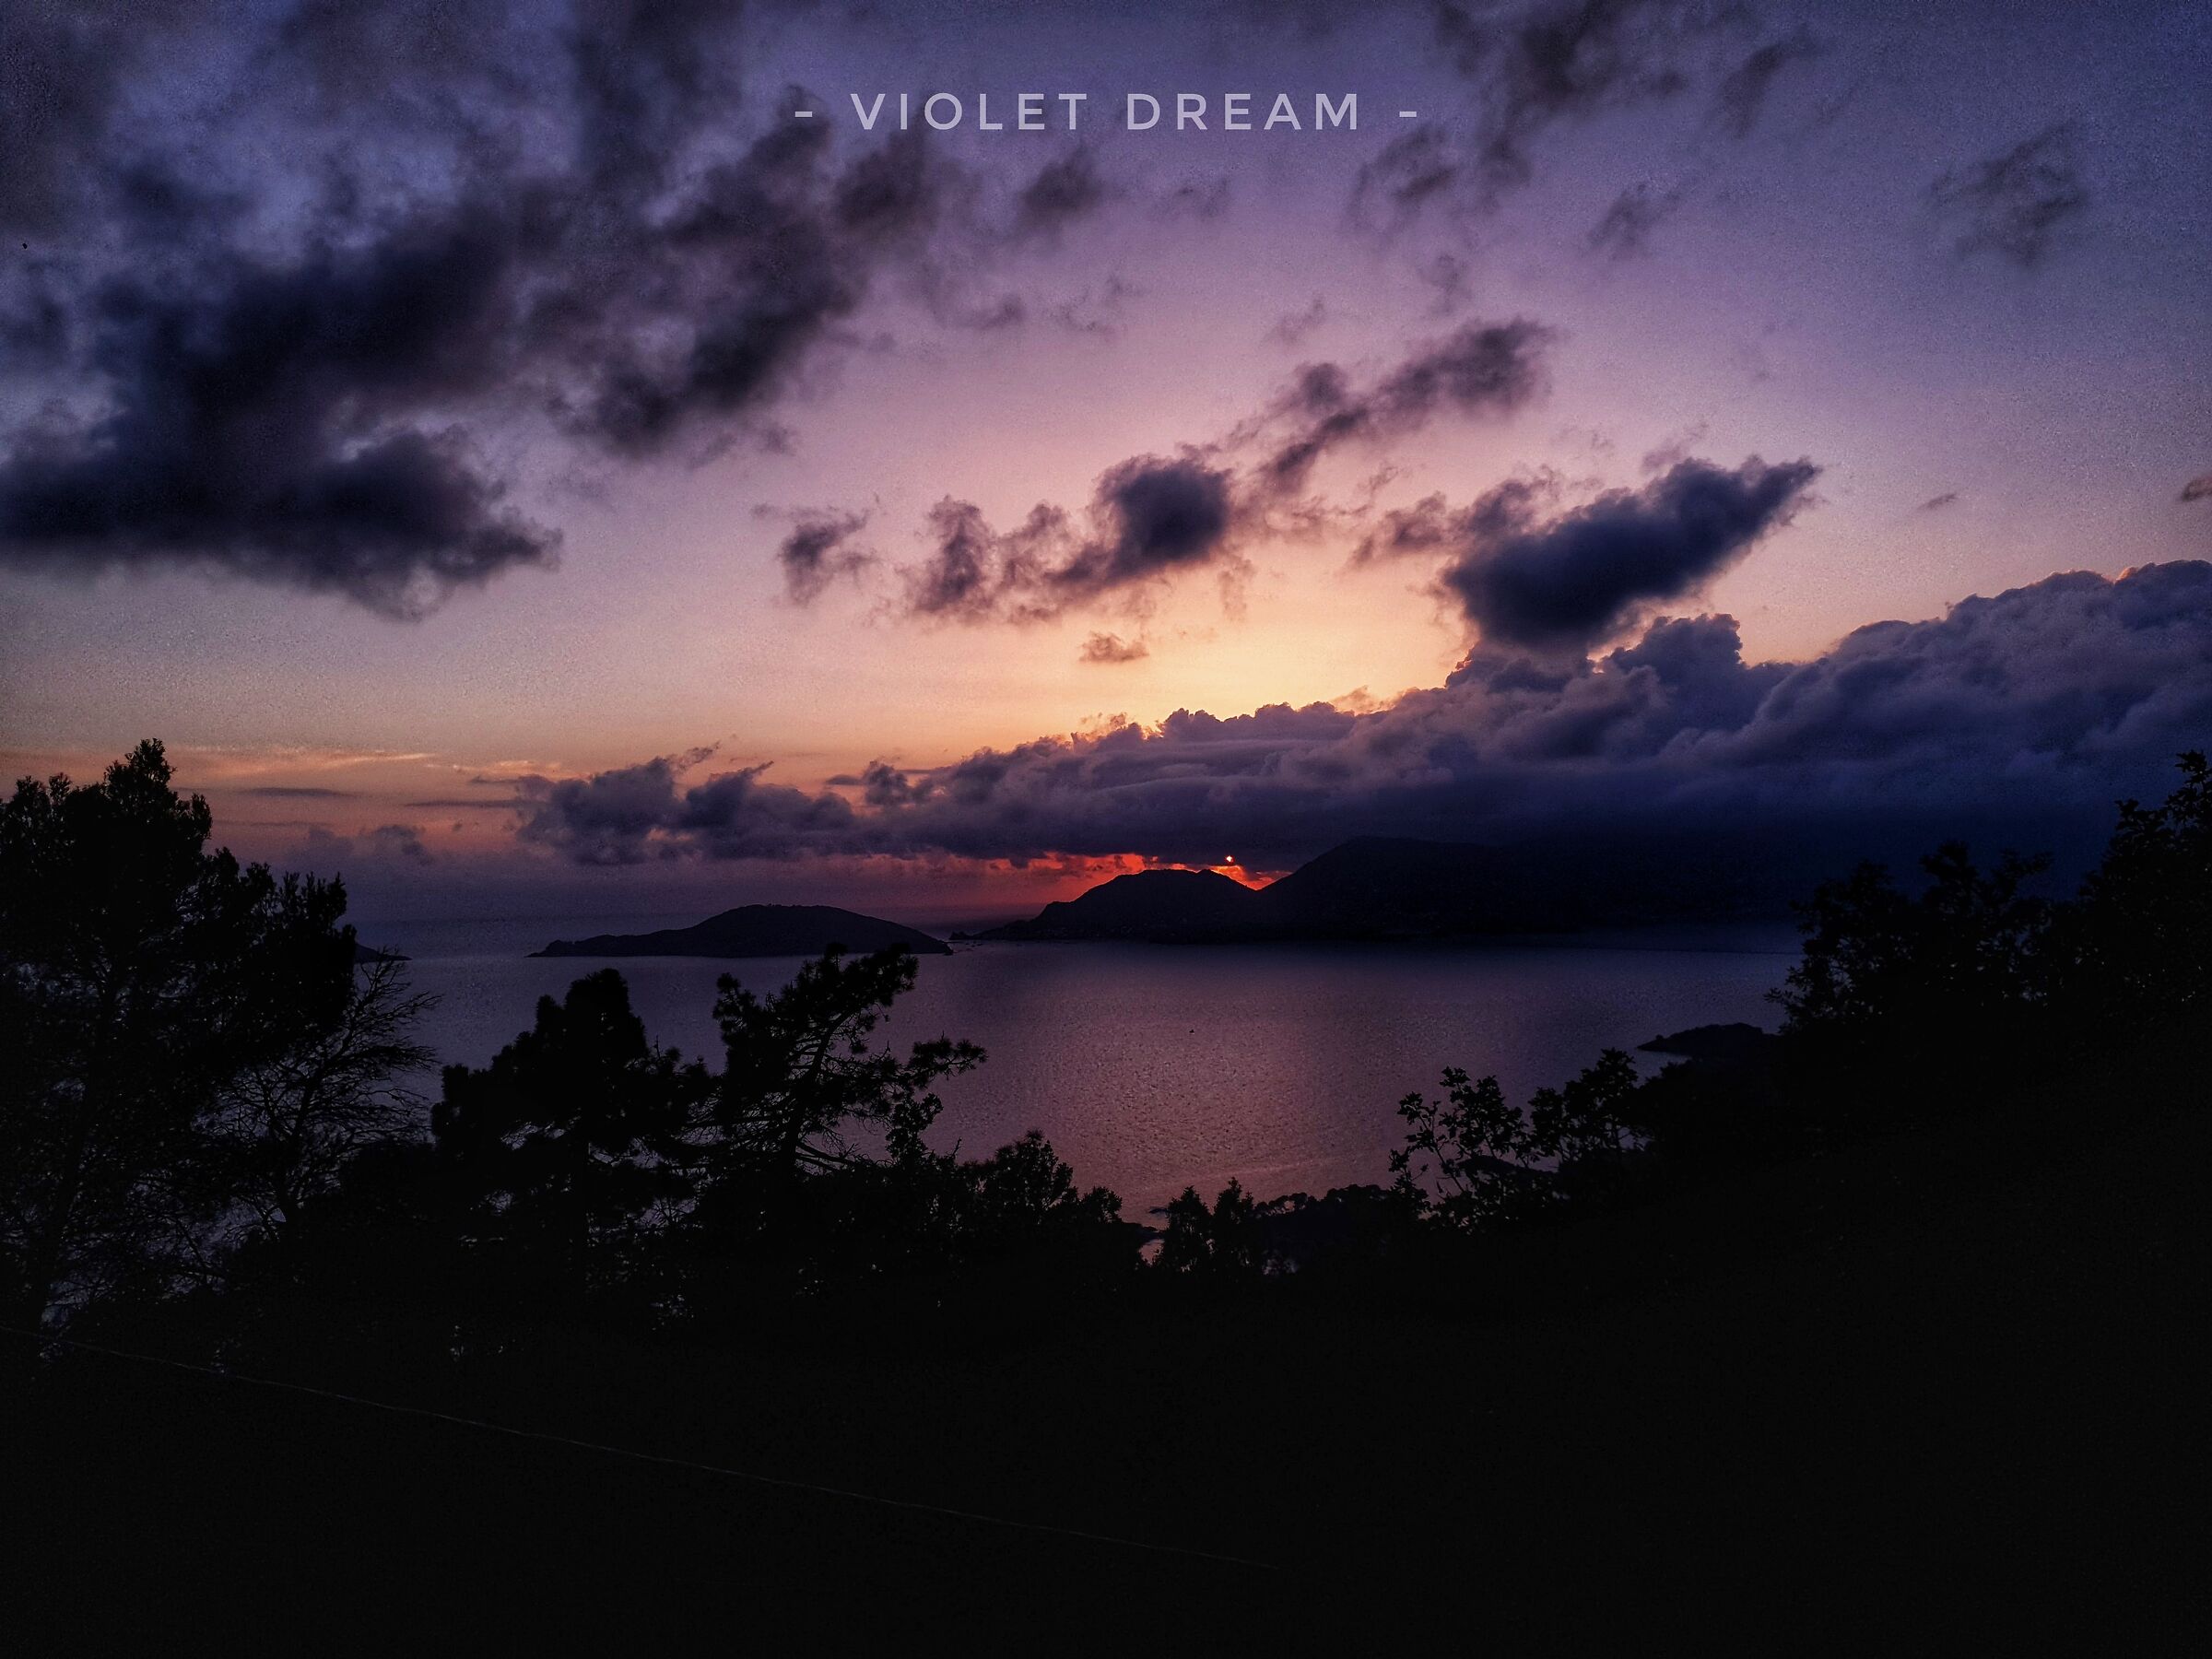 Violet dream...